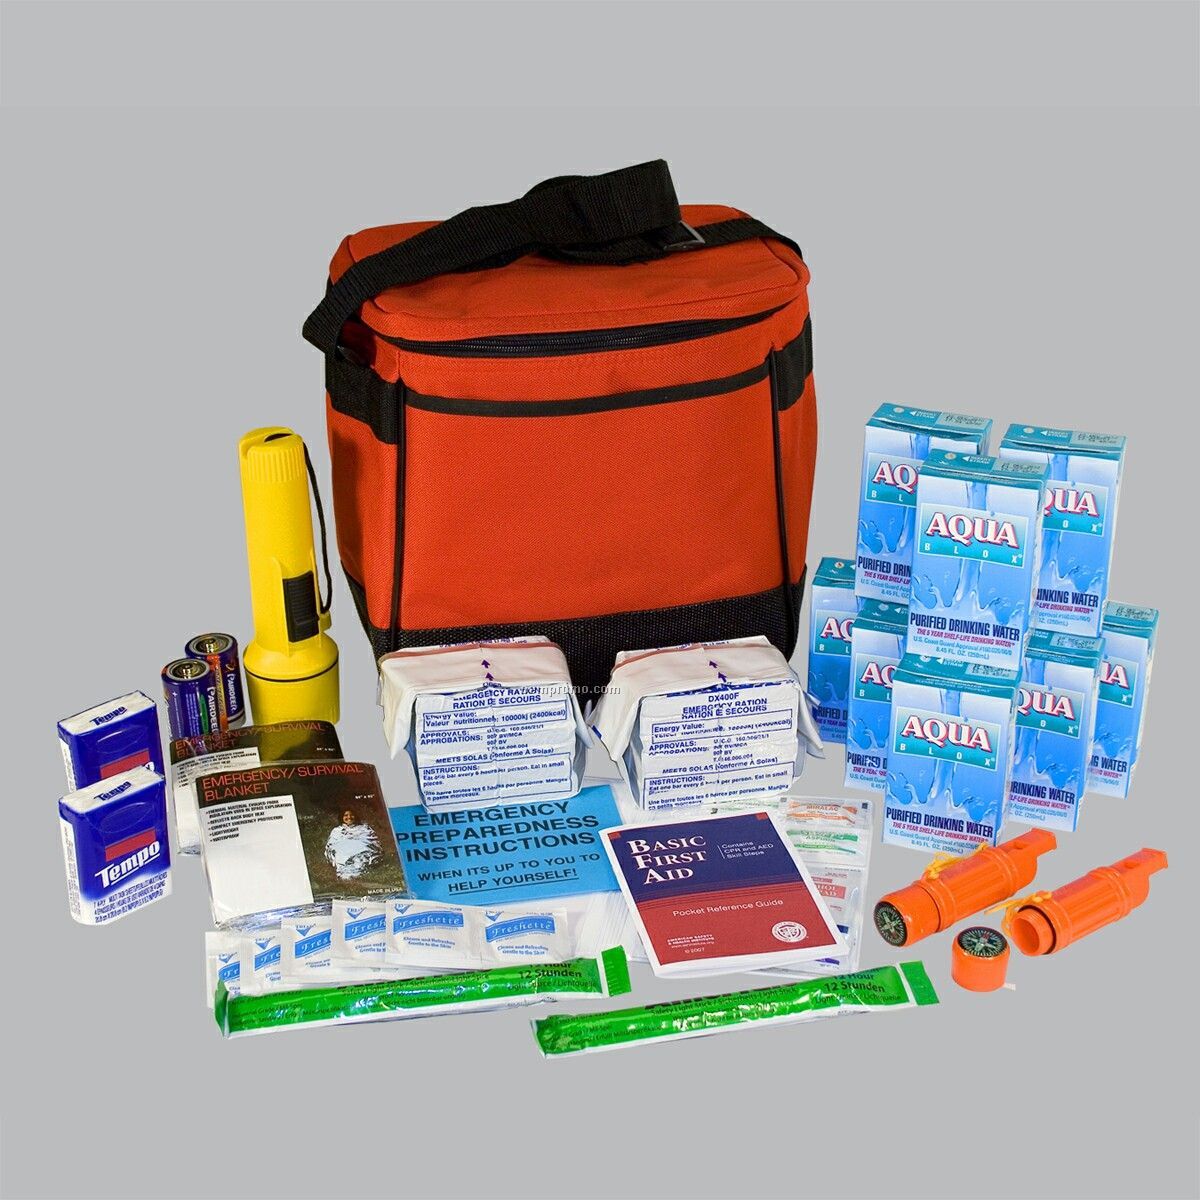 Two-person Emergency Preparedness Kit